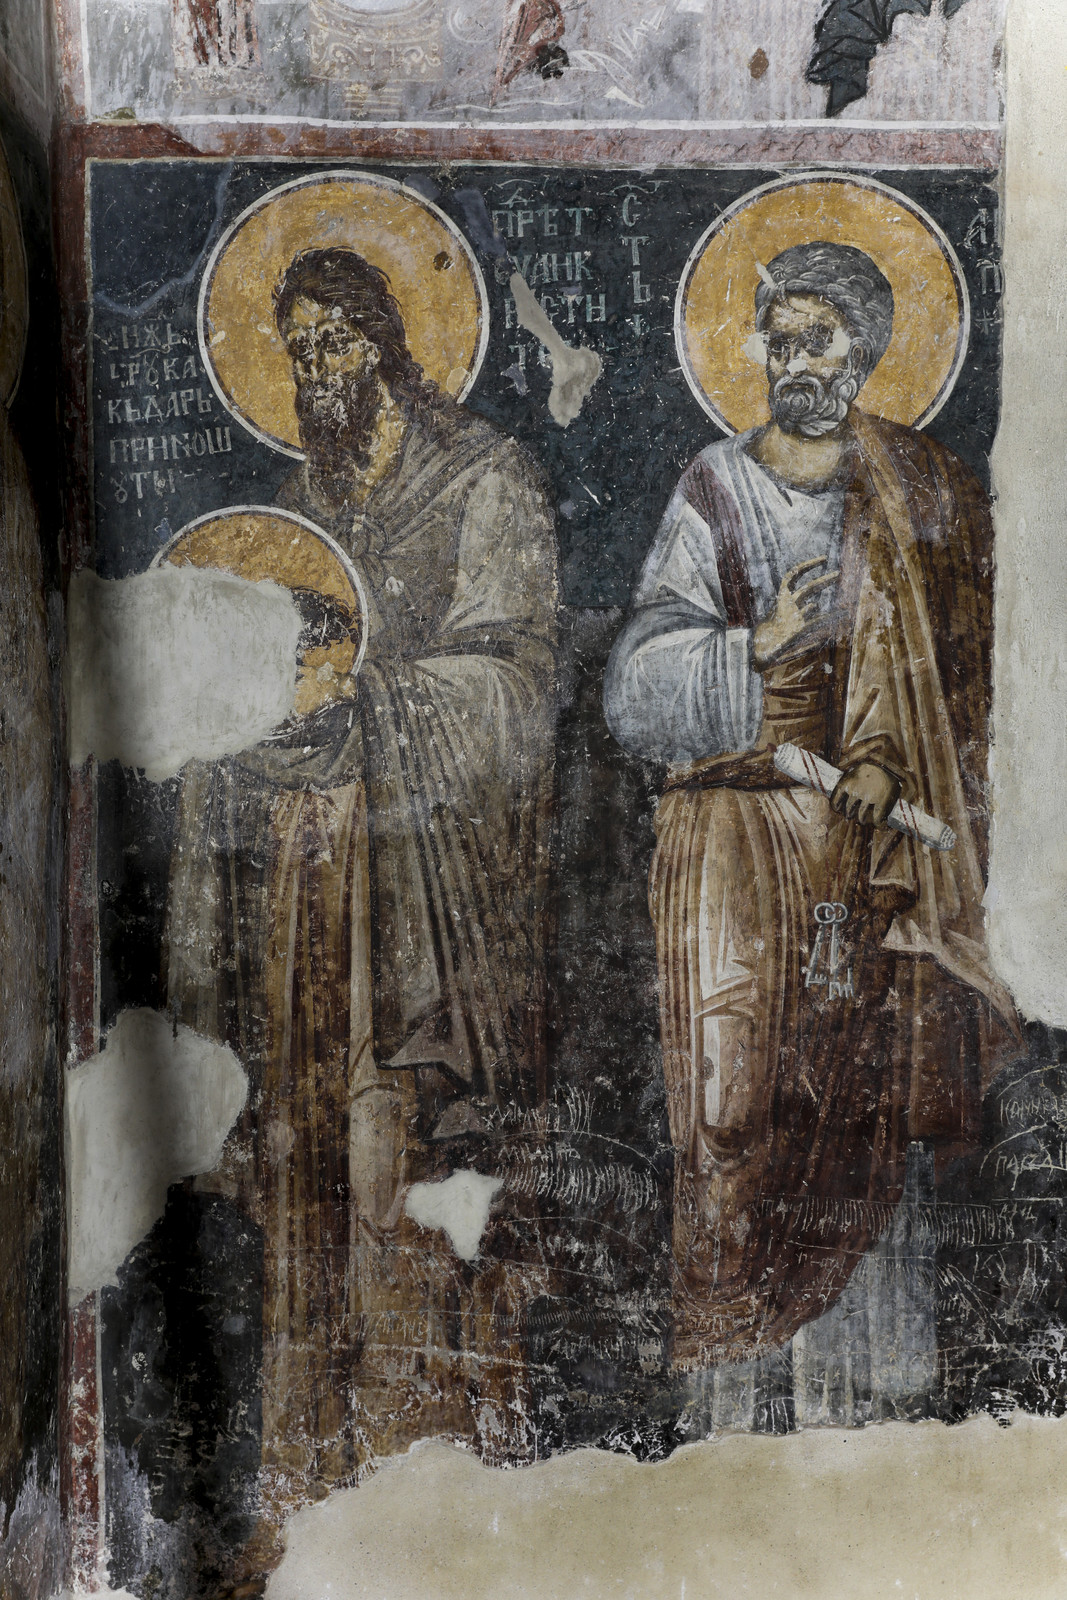 St. John the Baptist (Kephalophoros) and St. Peter the Apostle